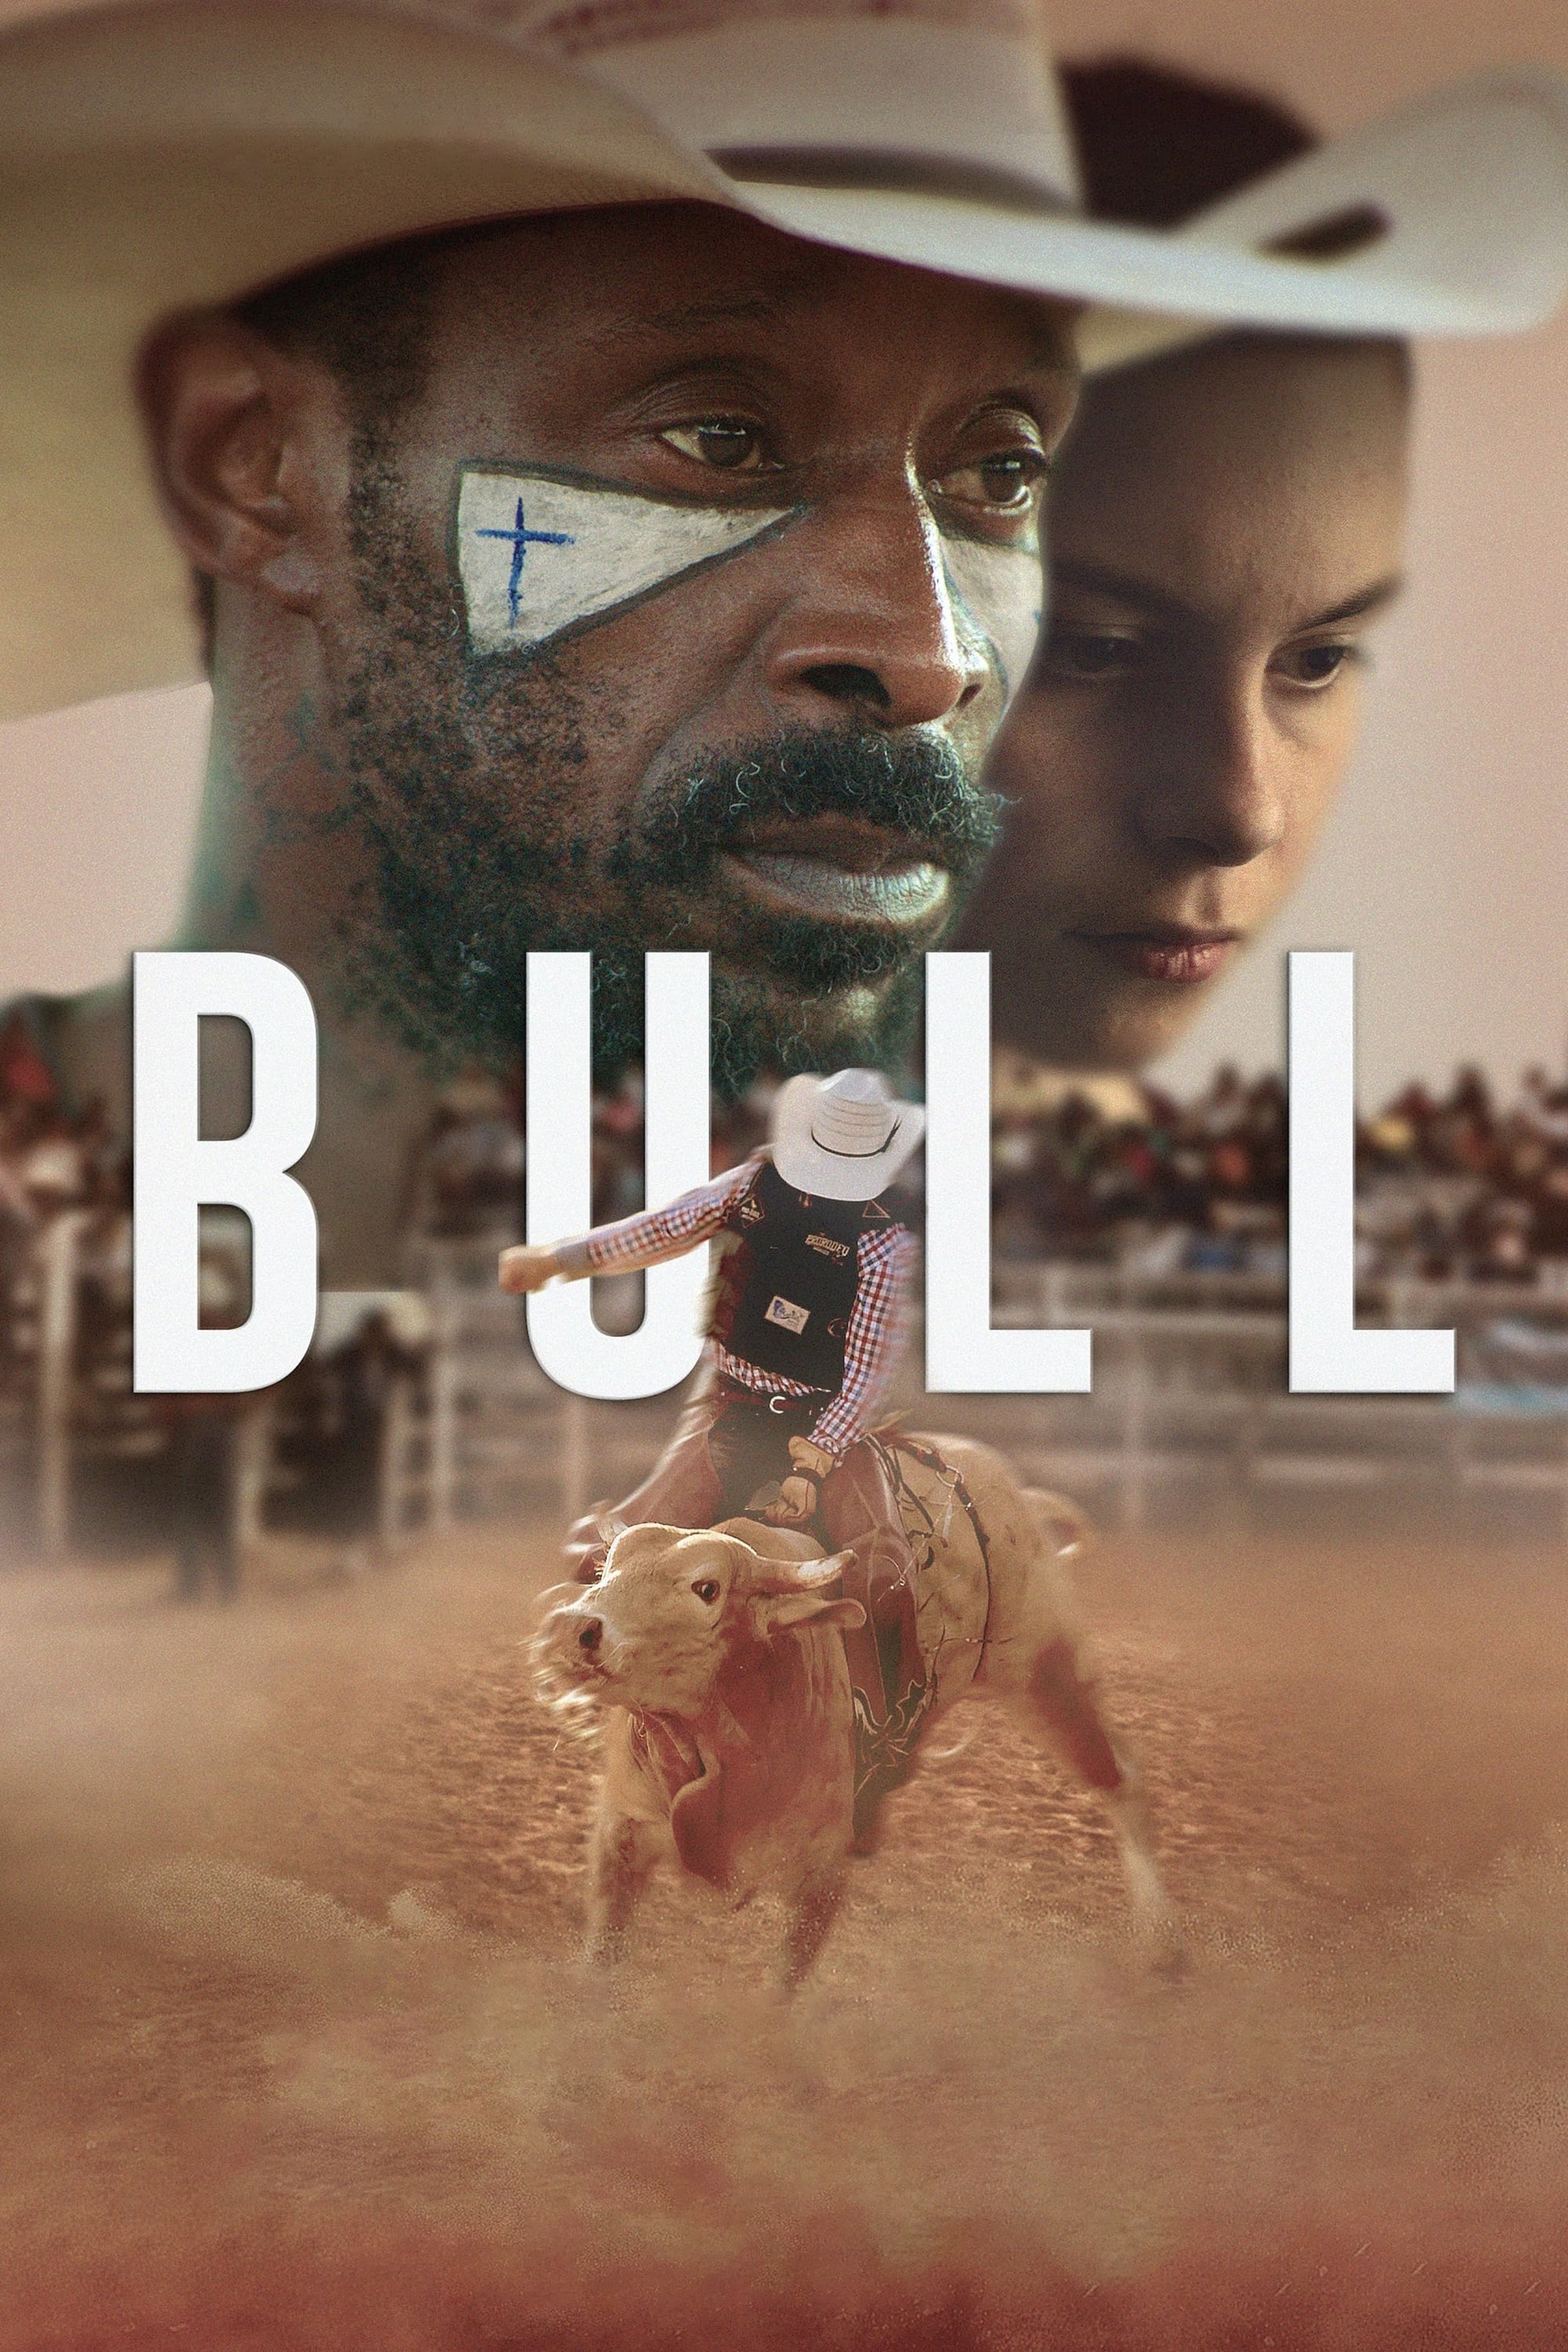 Plakat von "Bull"